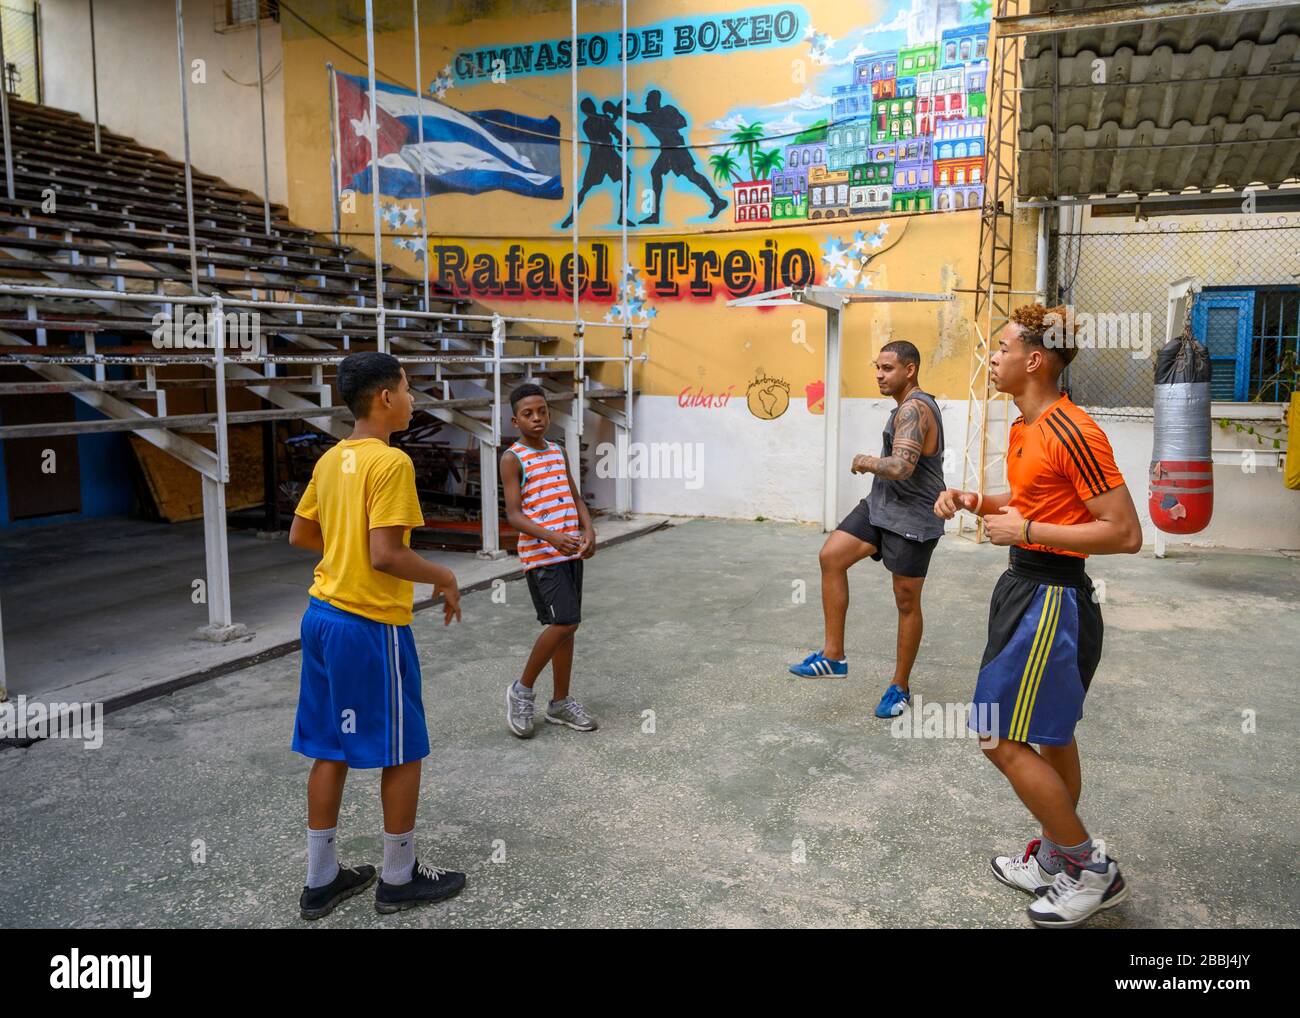 Rafael Trejo Boxing club, Havana Vieja, Cuba Stock Photo